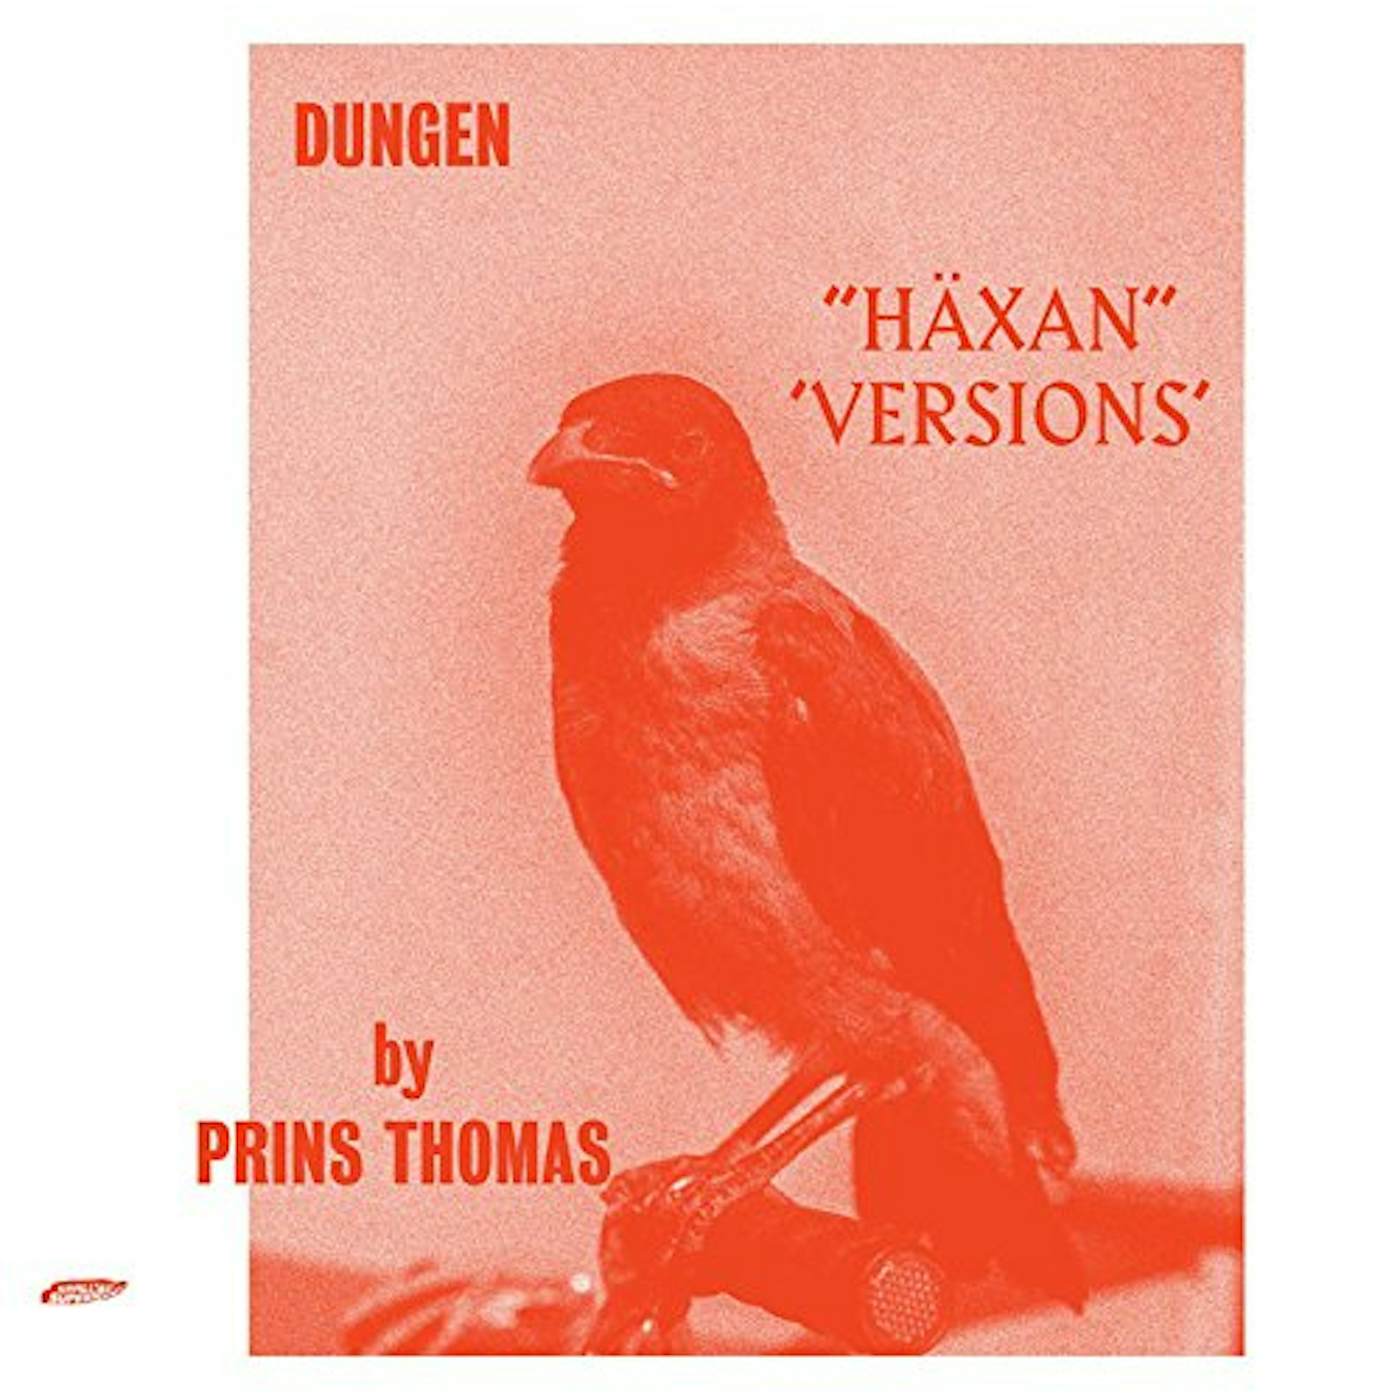 Dungen HAXAN (VERSIONS BY PRINS THOMAS) Vinyl Record